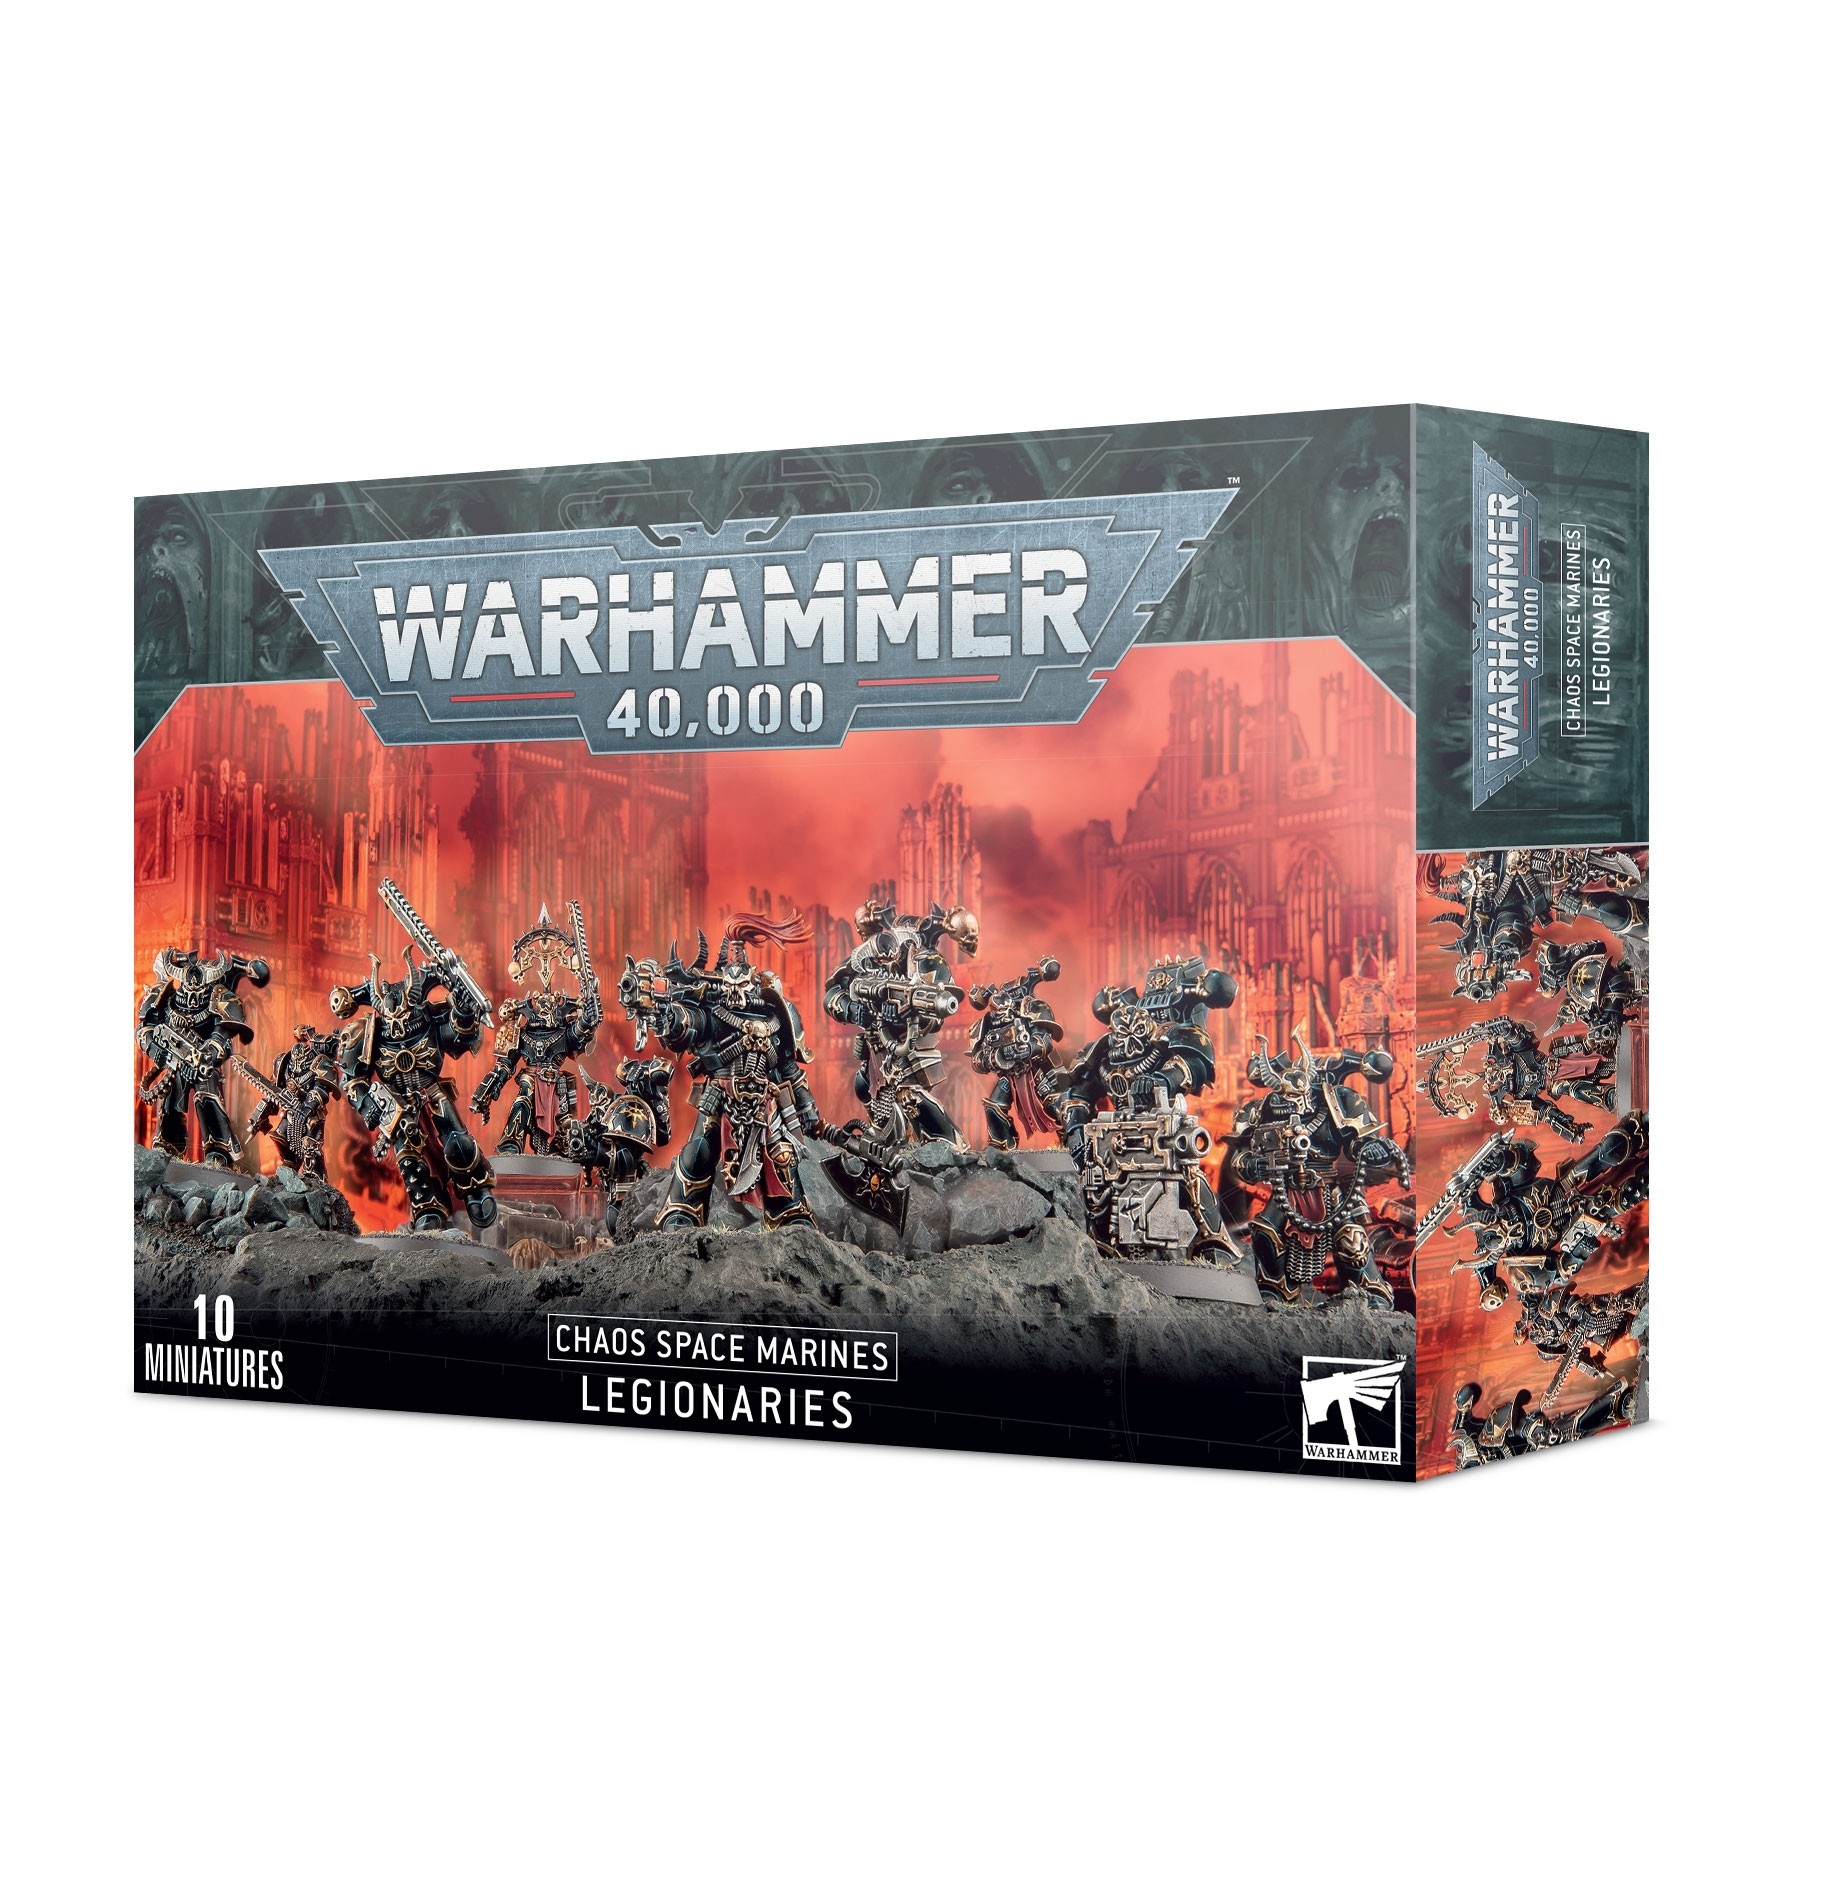 Warhammer 40k Paint Set 